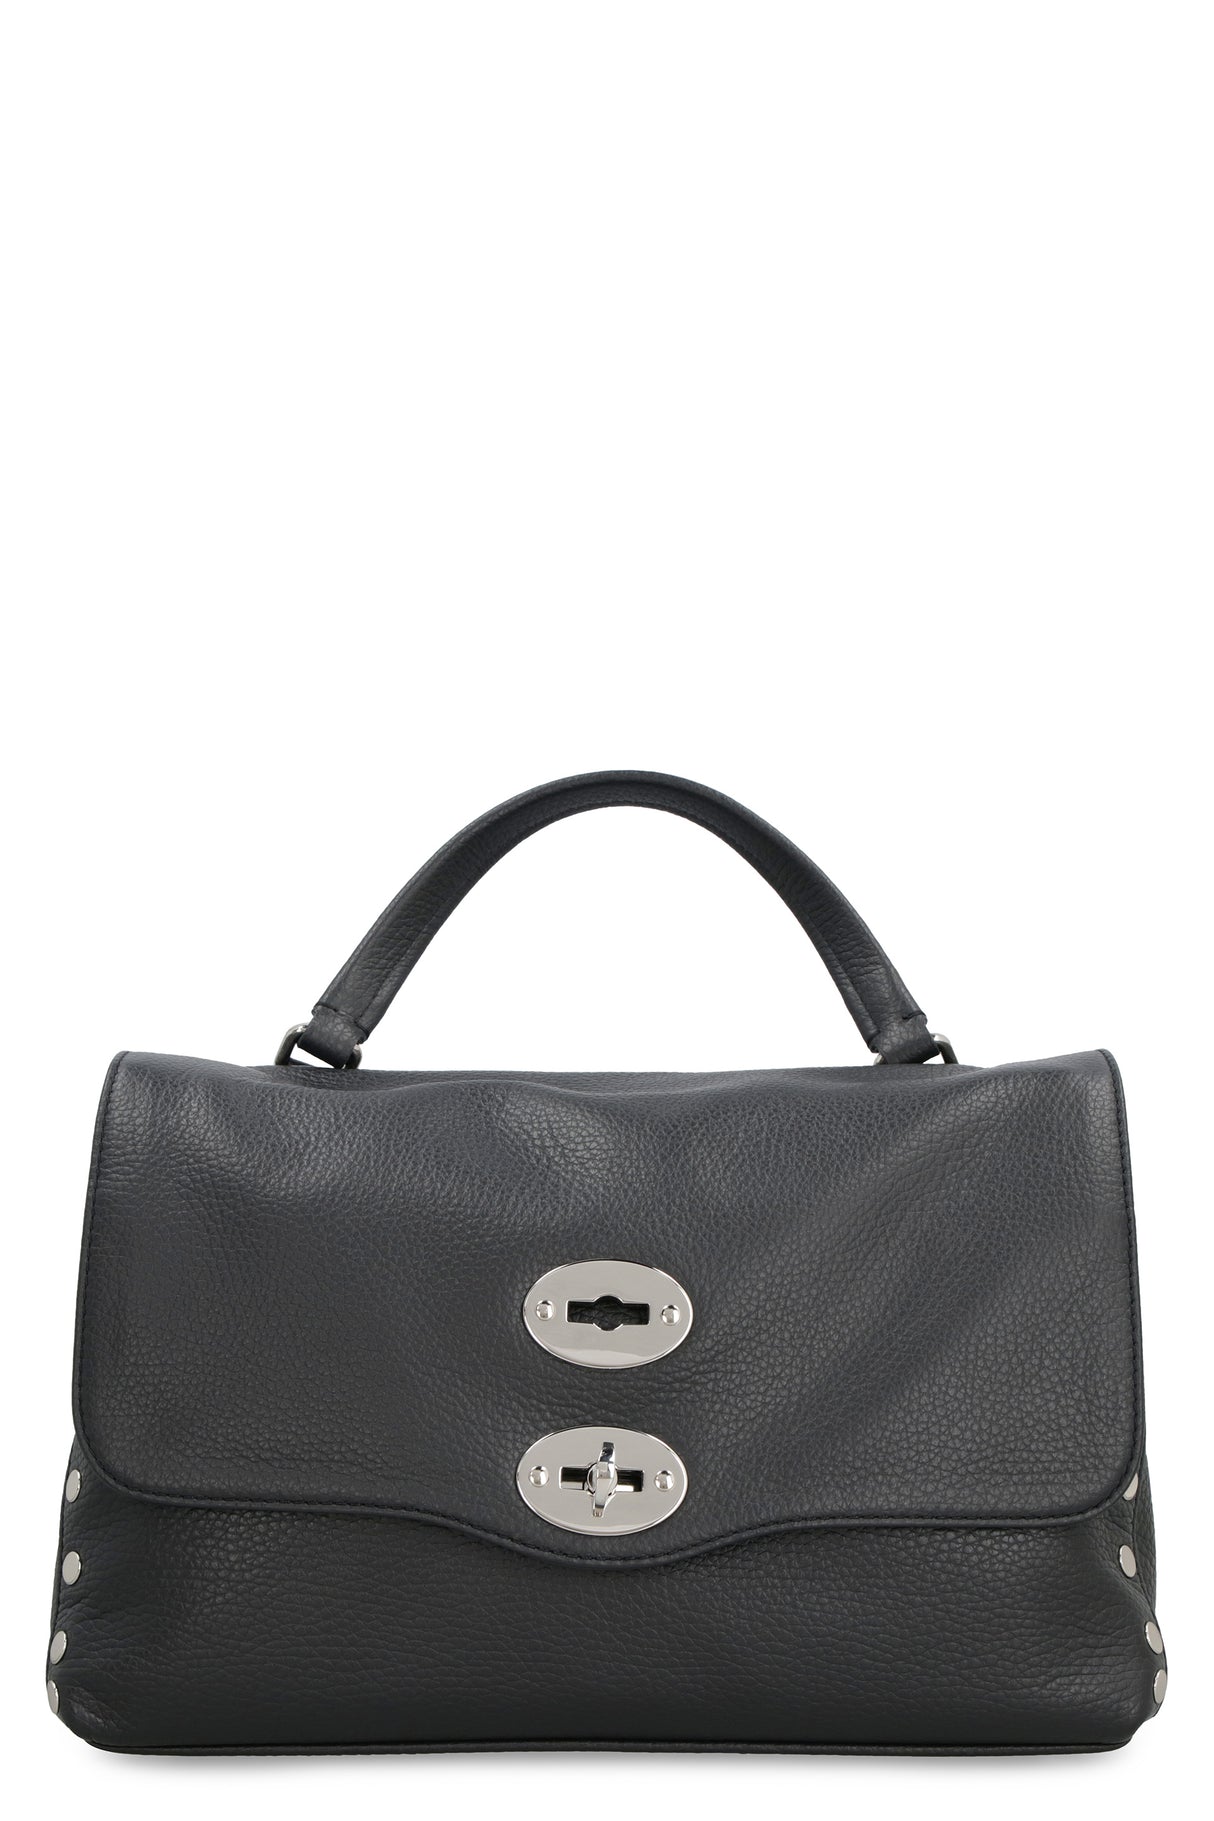 ZANELLATO Grained Leather Handbag with Decorative Studs and Removable Shoulder Strap